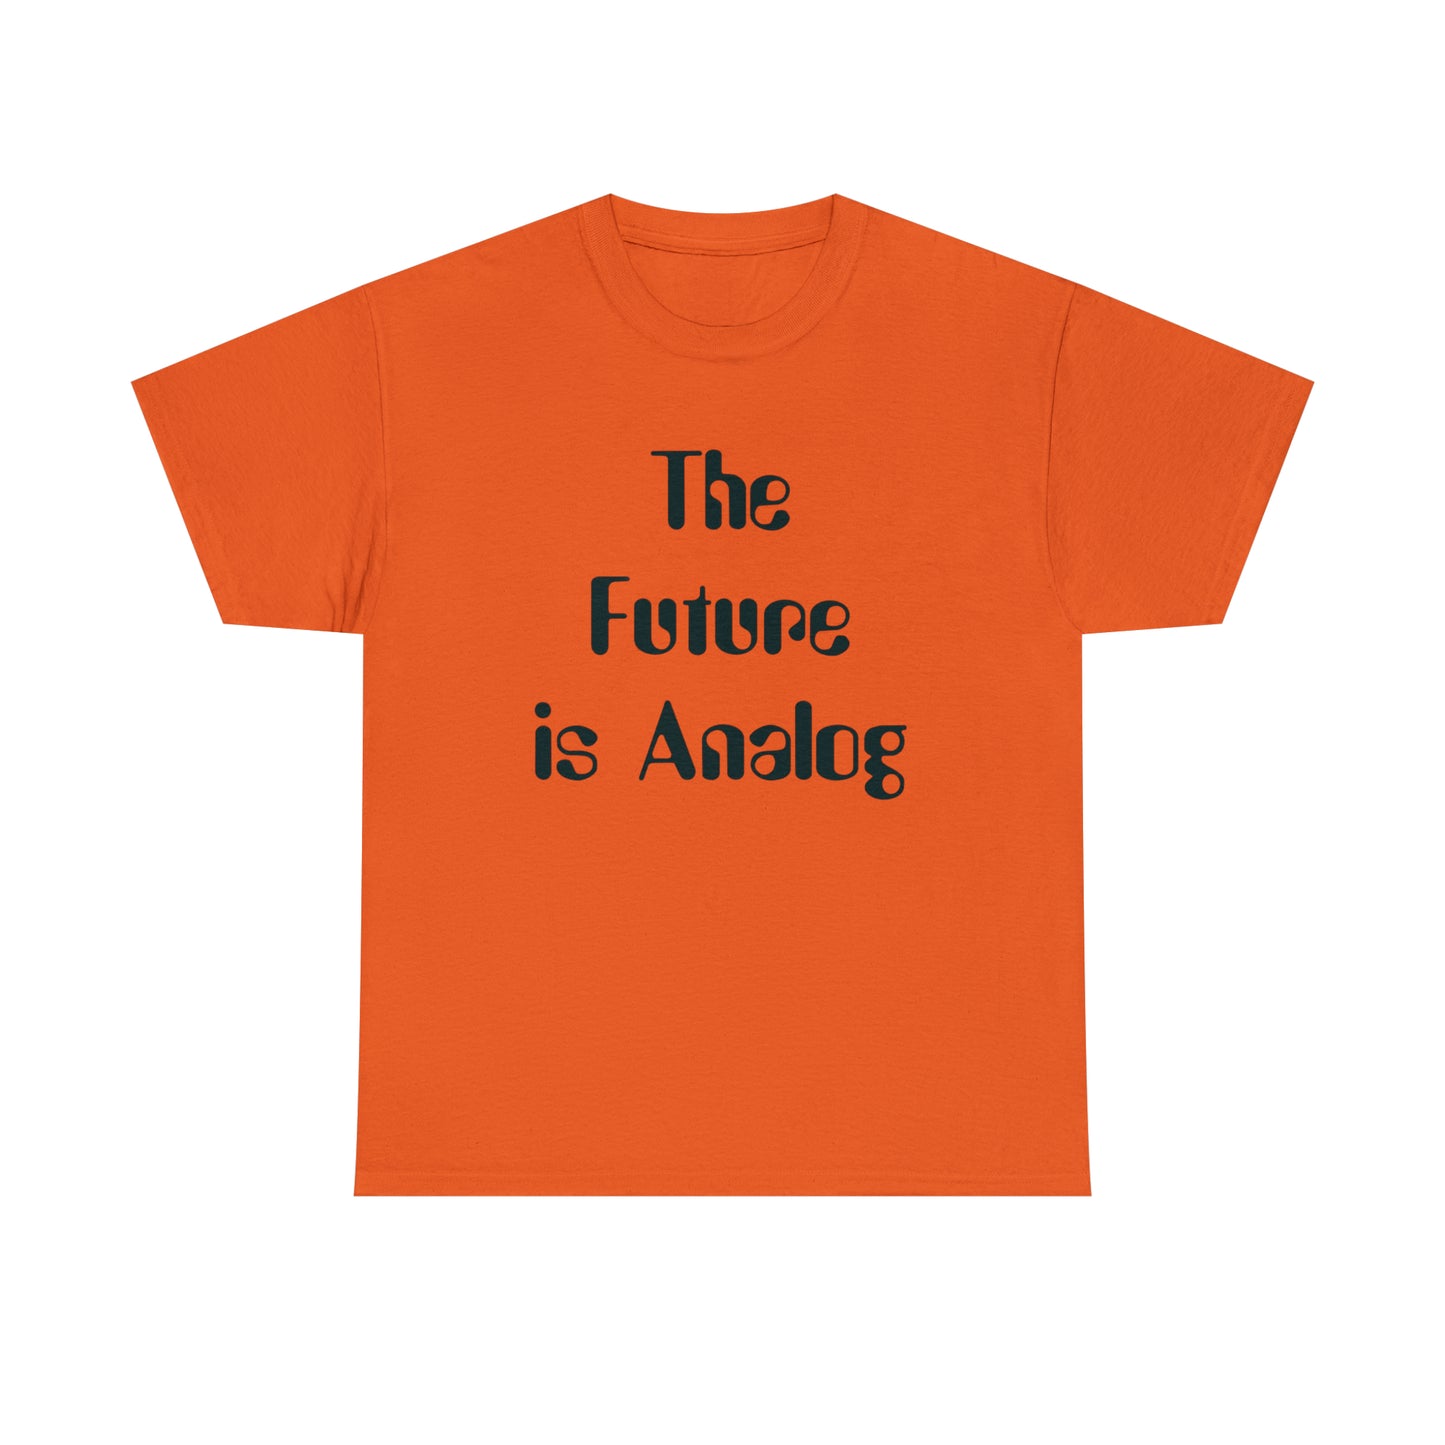 Analog T-Shirt For Future TShirt For Retro Vibes T Shirt For Analog Tech Shirt For Old School T-Shirt For Nerd Gift